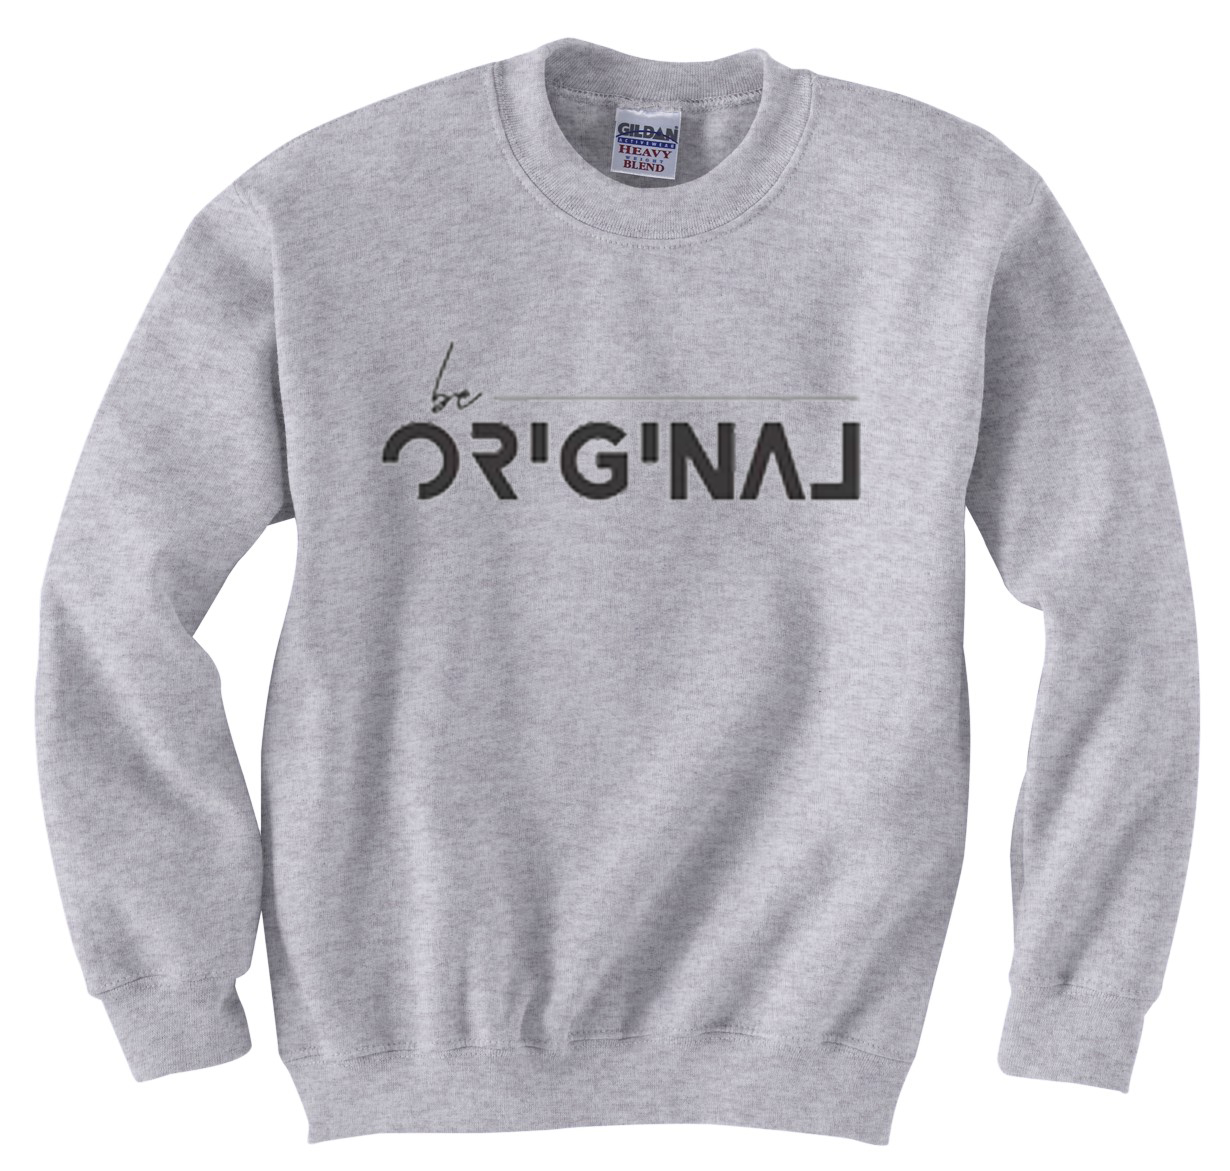 Be Original Grey Sweatshirts